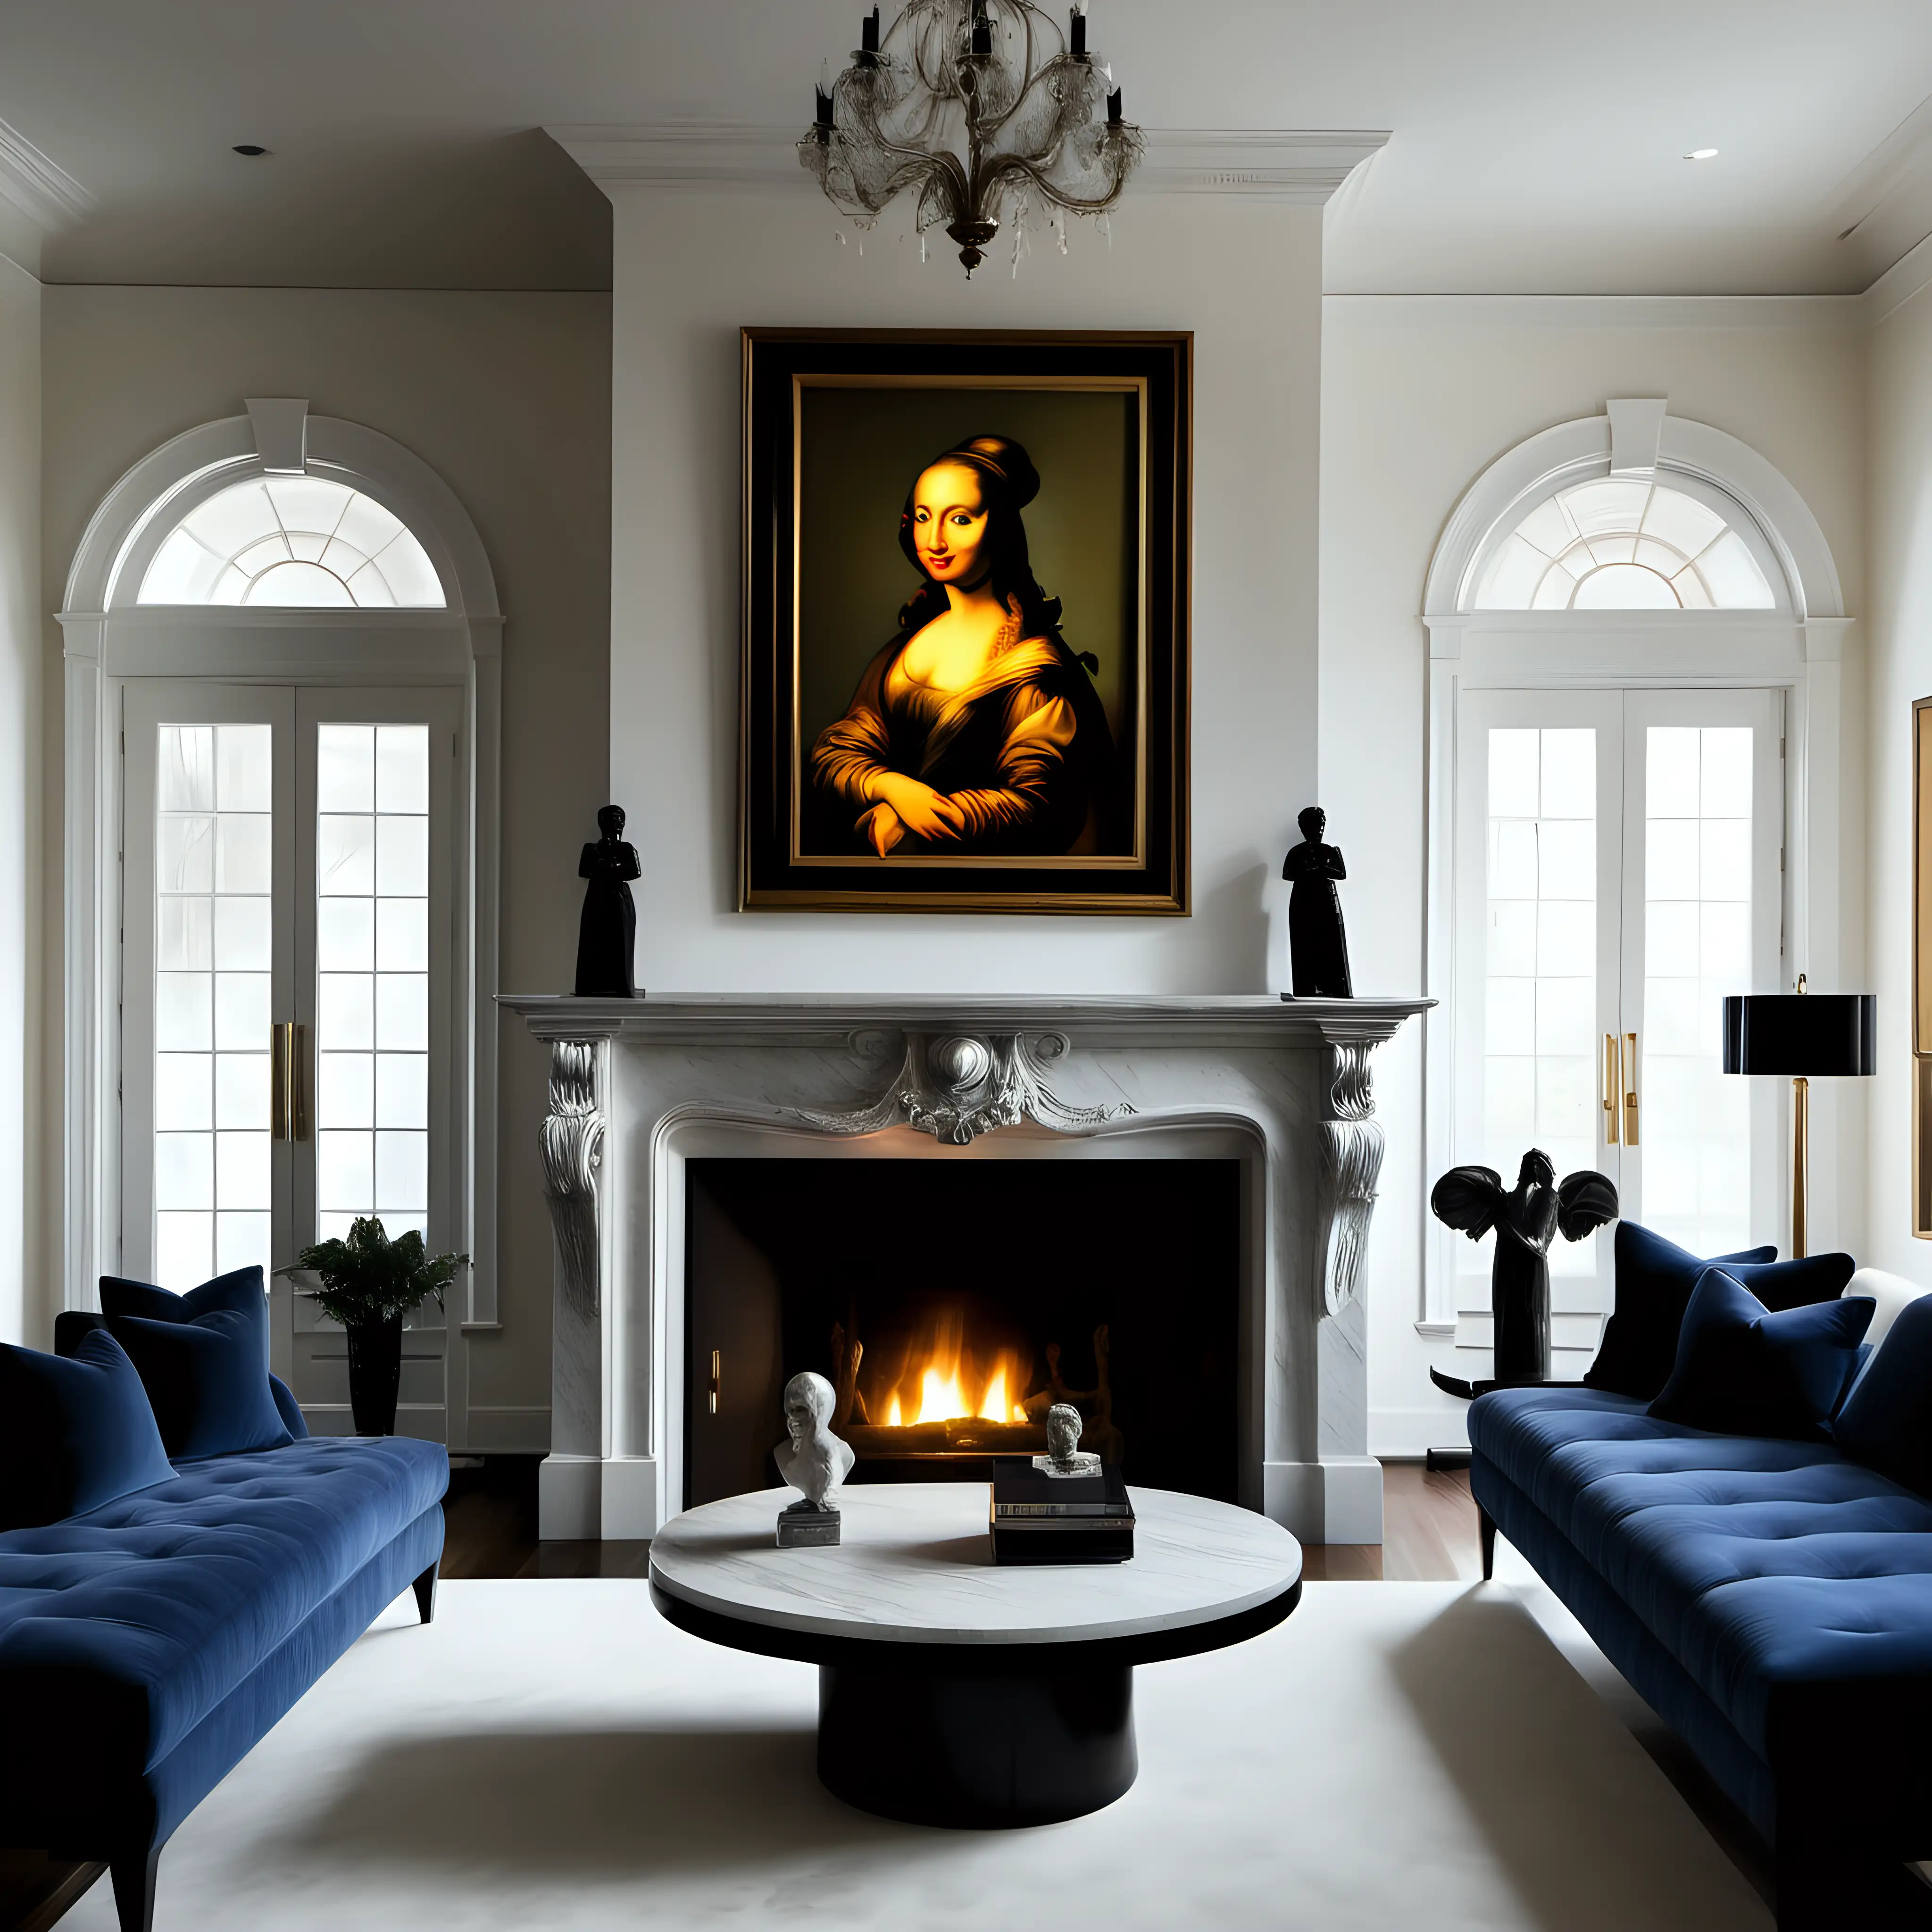 Luxurious Framed Art Adorning MultiMillion Dollar Home Fireplace